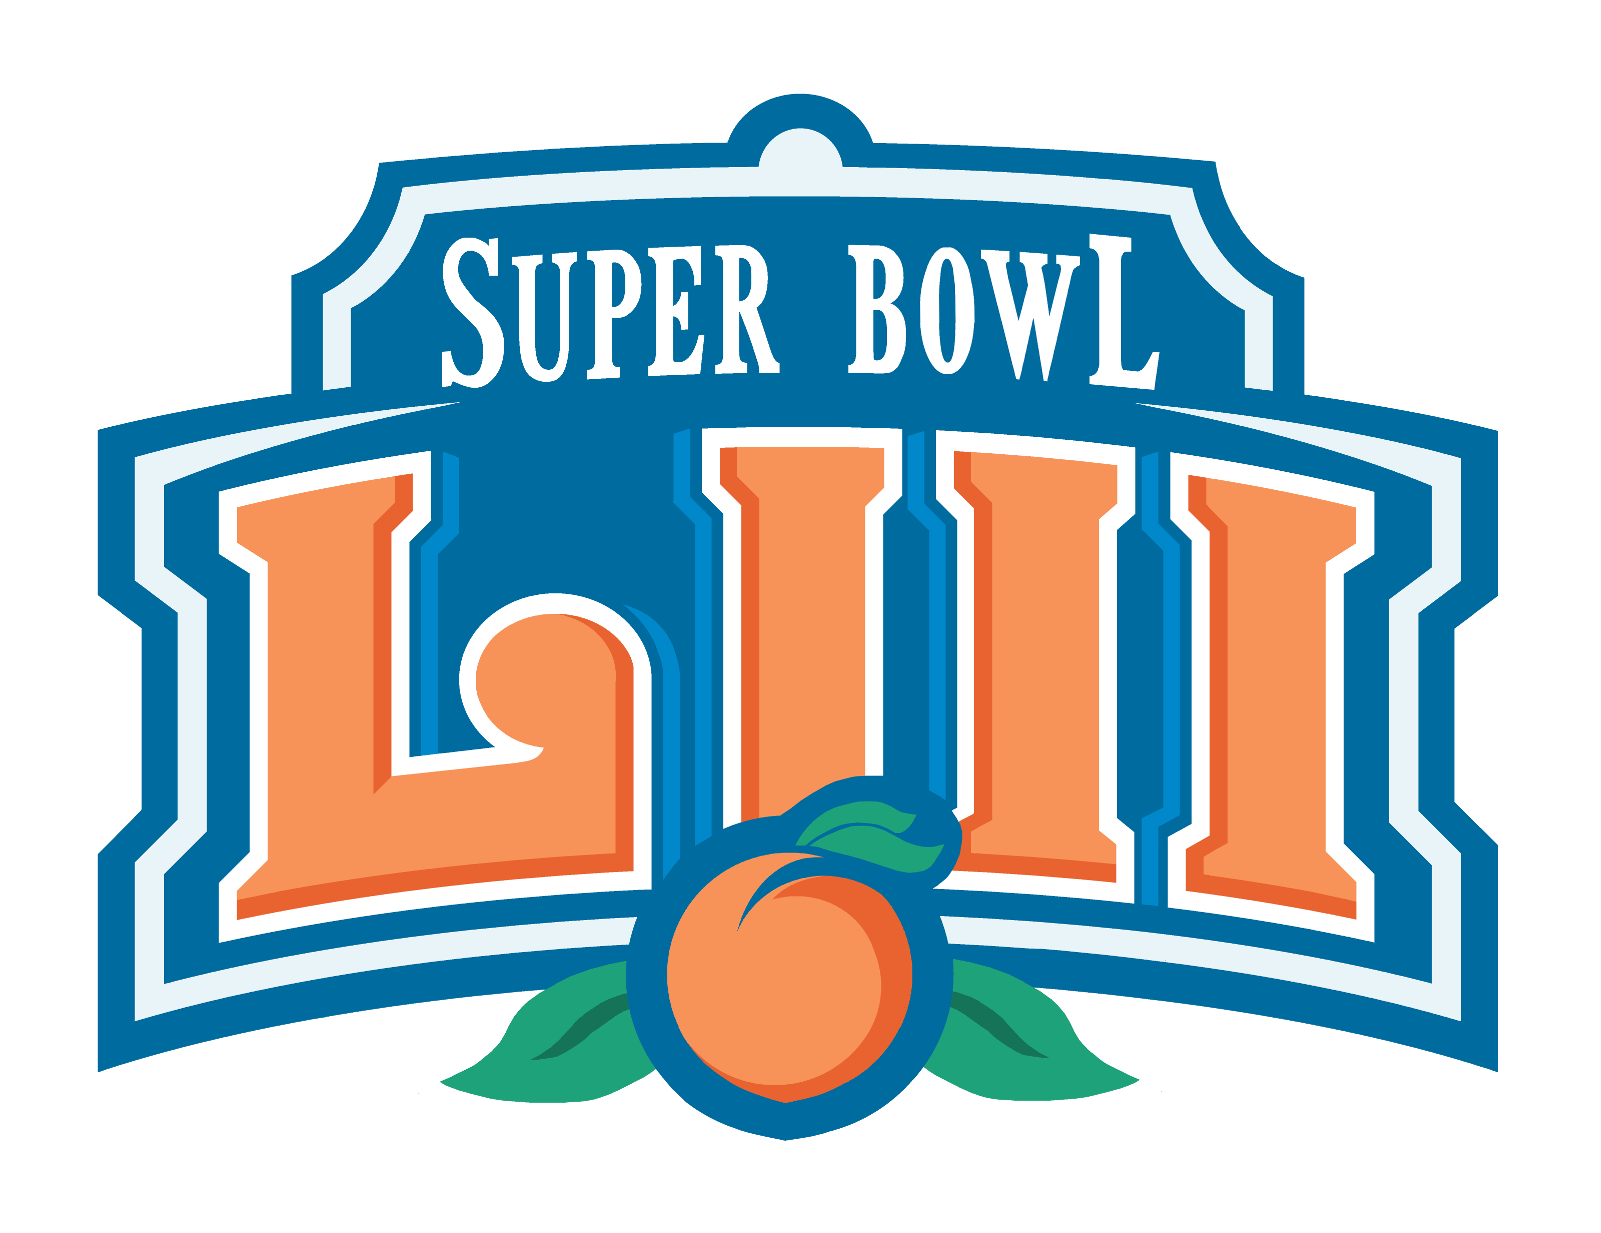 Super bowl 53 Logos